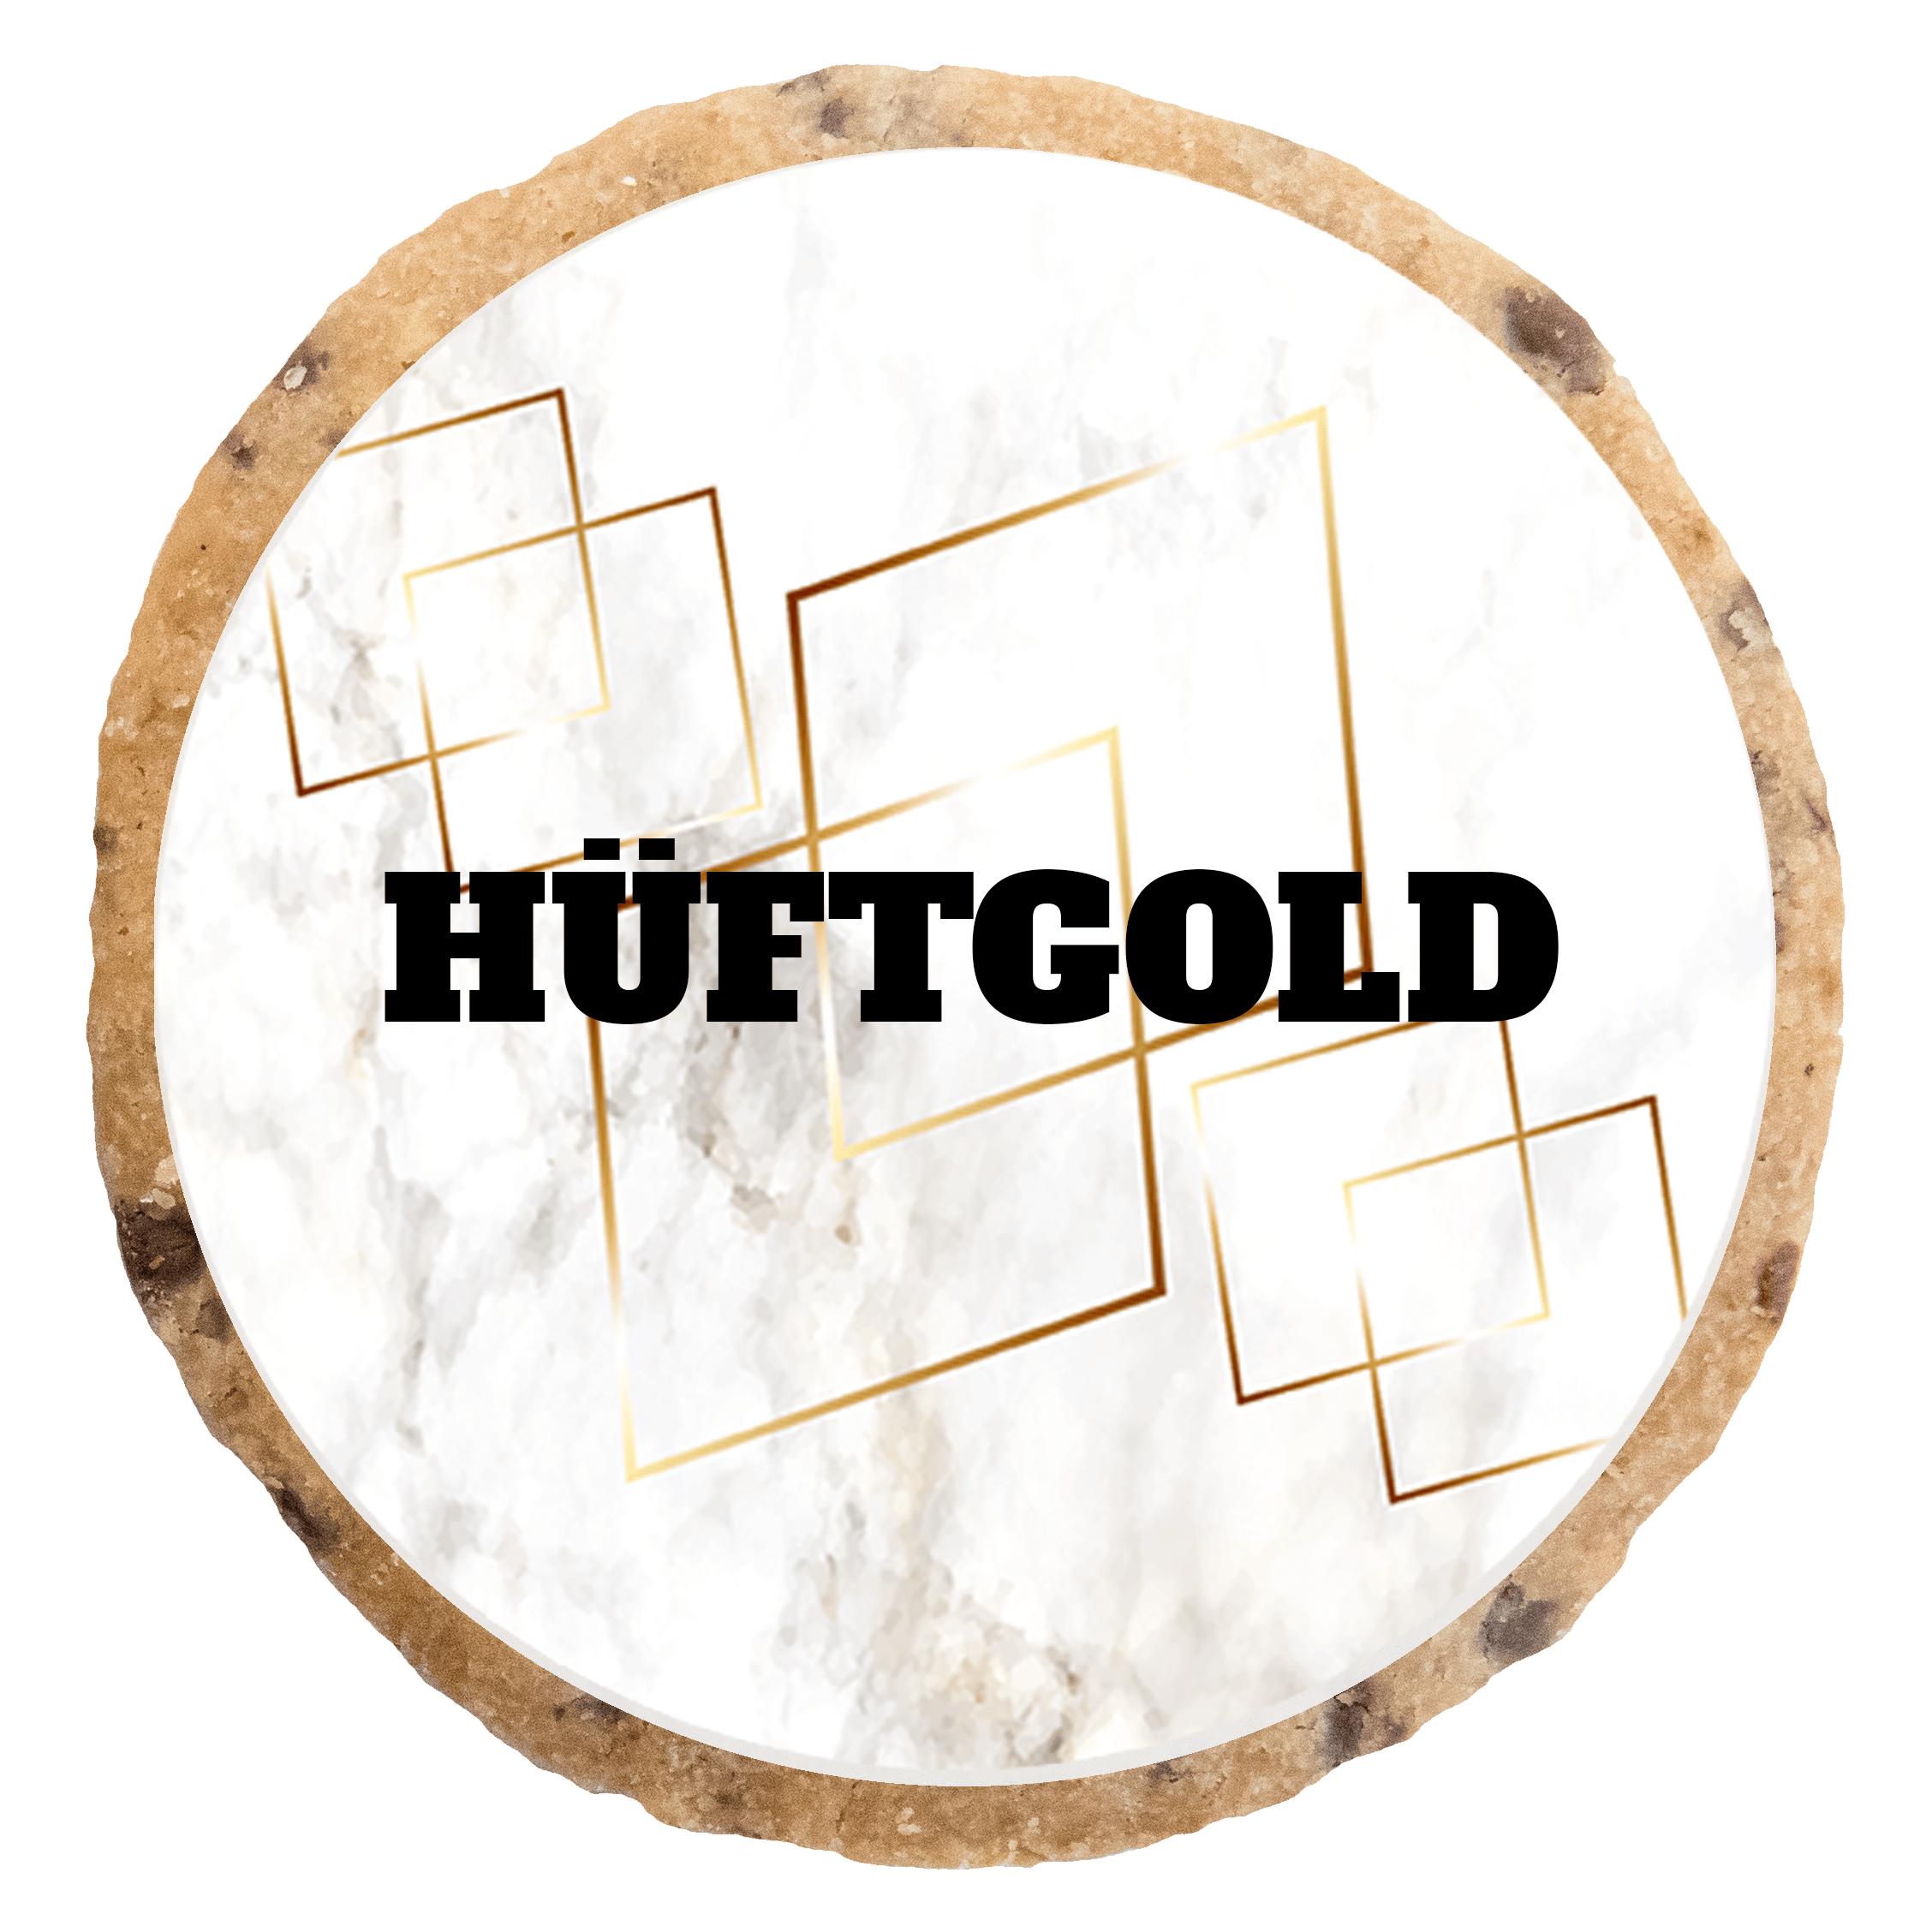 "Hüftgold" MotivKEKS